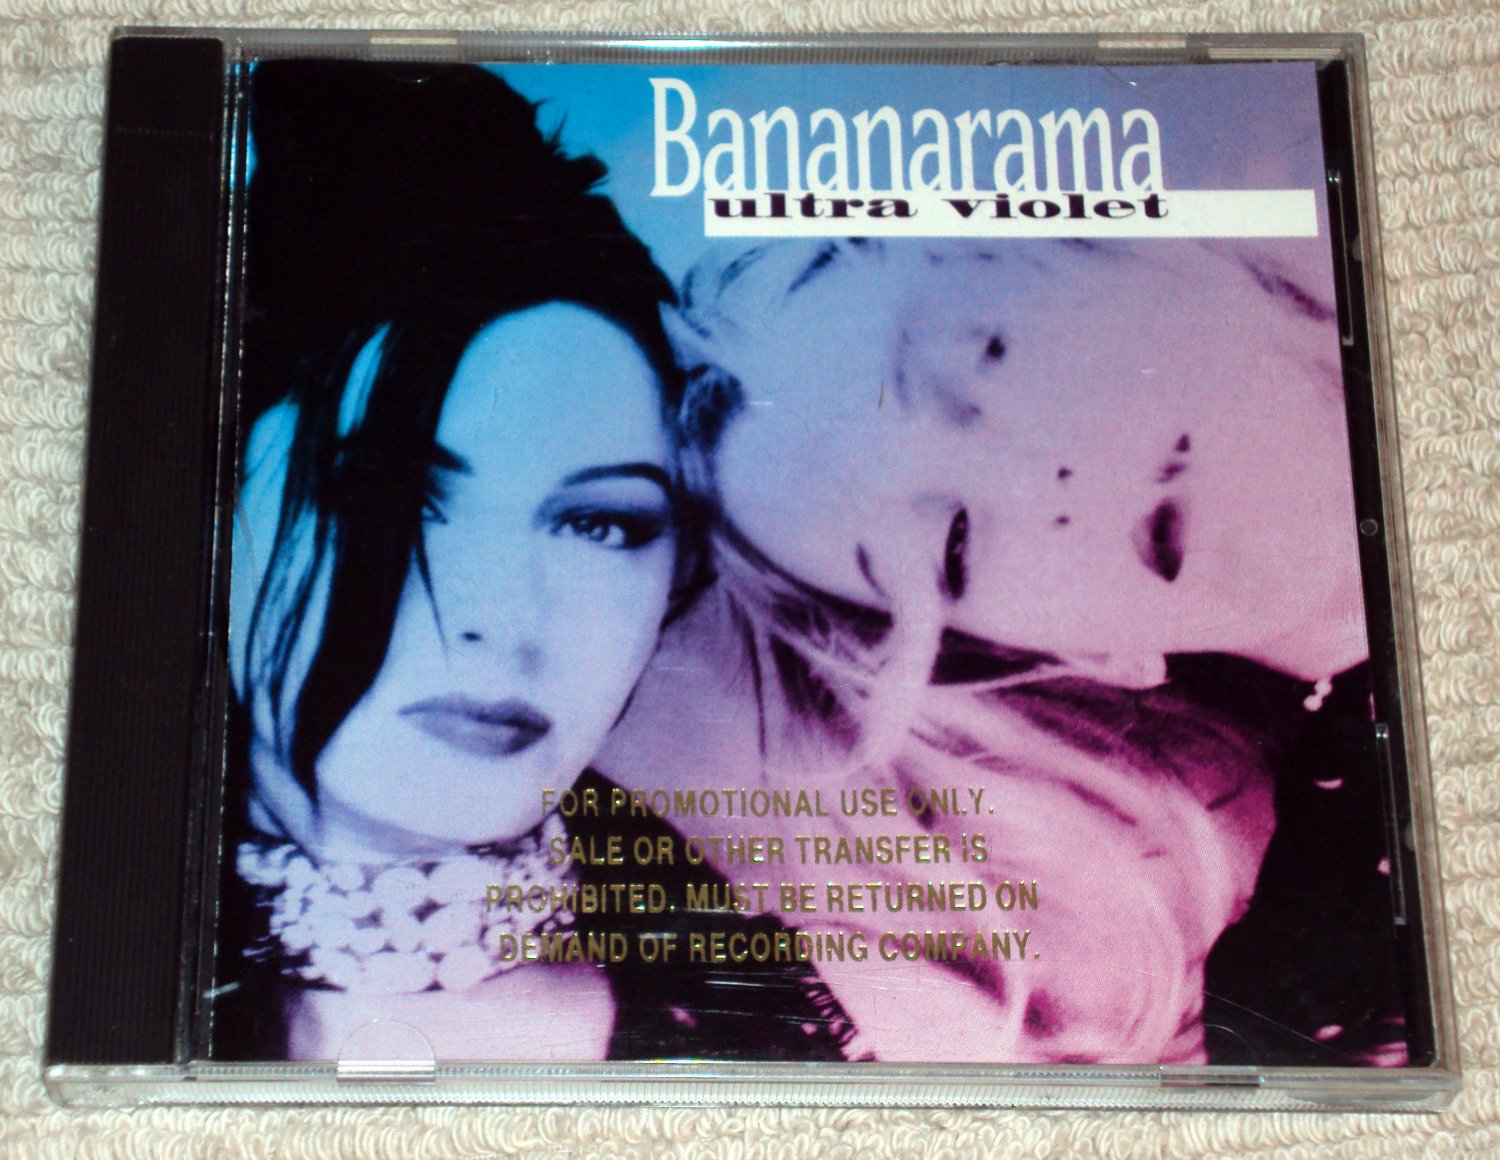 Bananarama – Ultra Violet (CD, Promo, 11 Tracks plus Bonus Track)